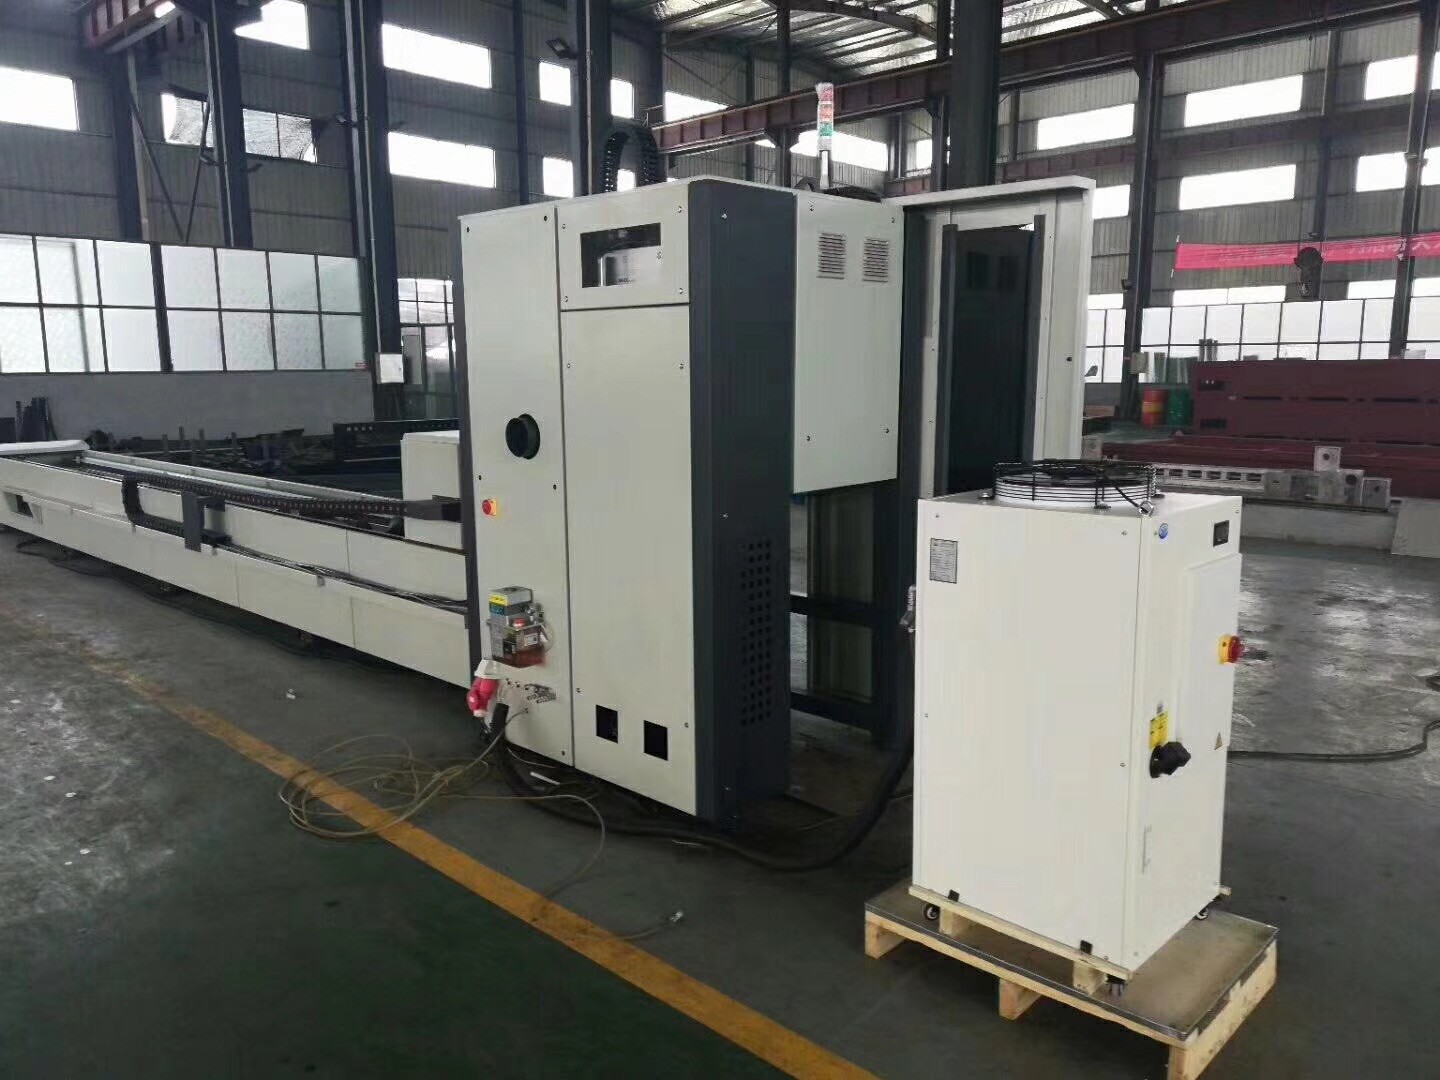 China SWANSOFT LASER Fiber Laser Made In China Steel Amp Aluminum Coil Sheet Cutting Machine factory